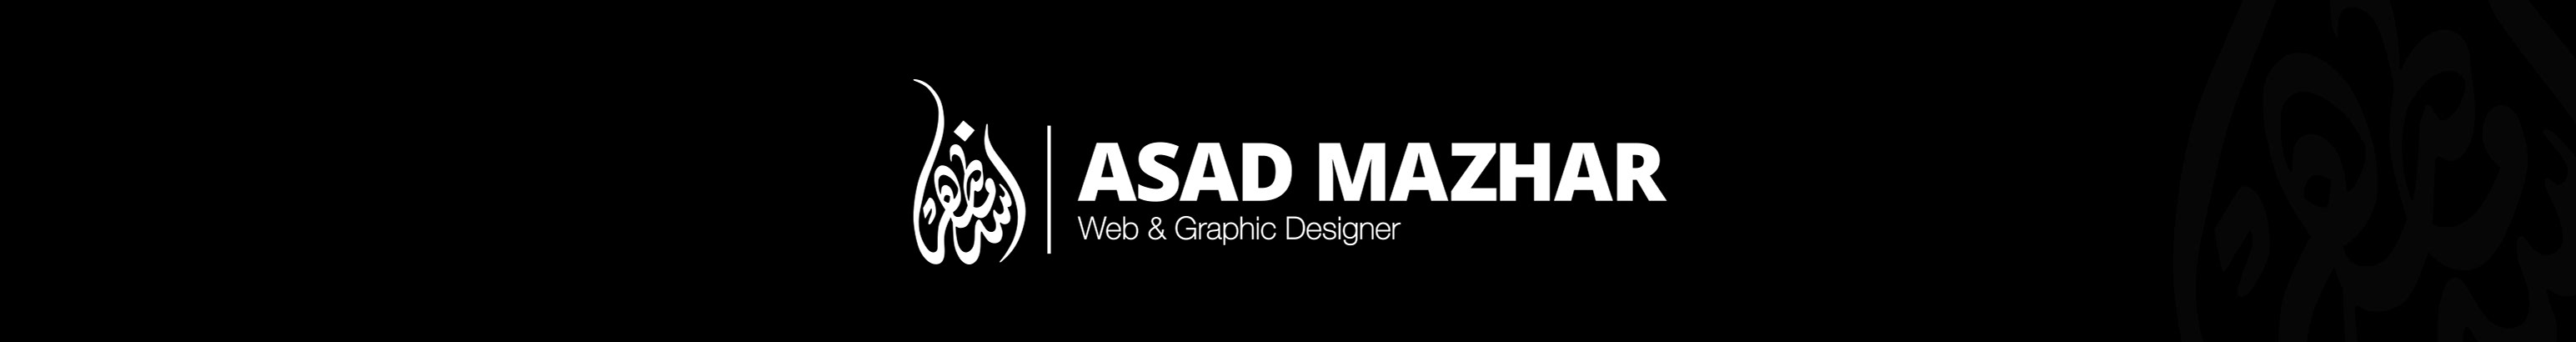 Asad Mazhar's profile banner